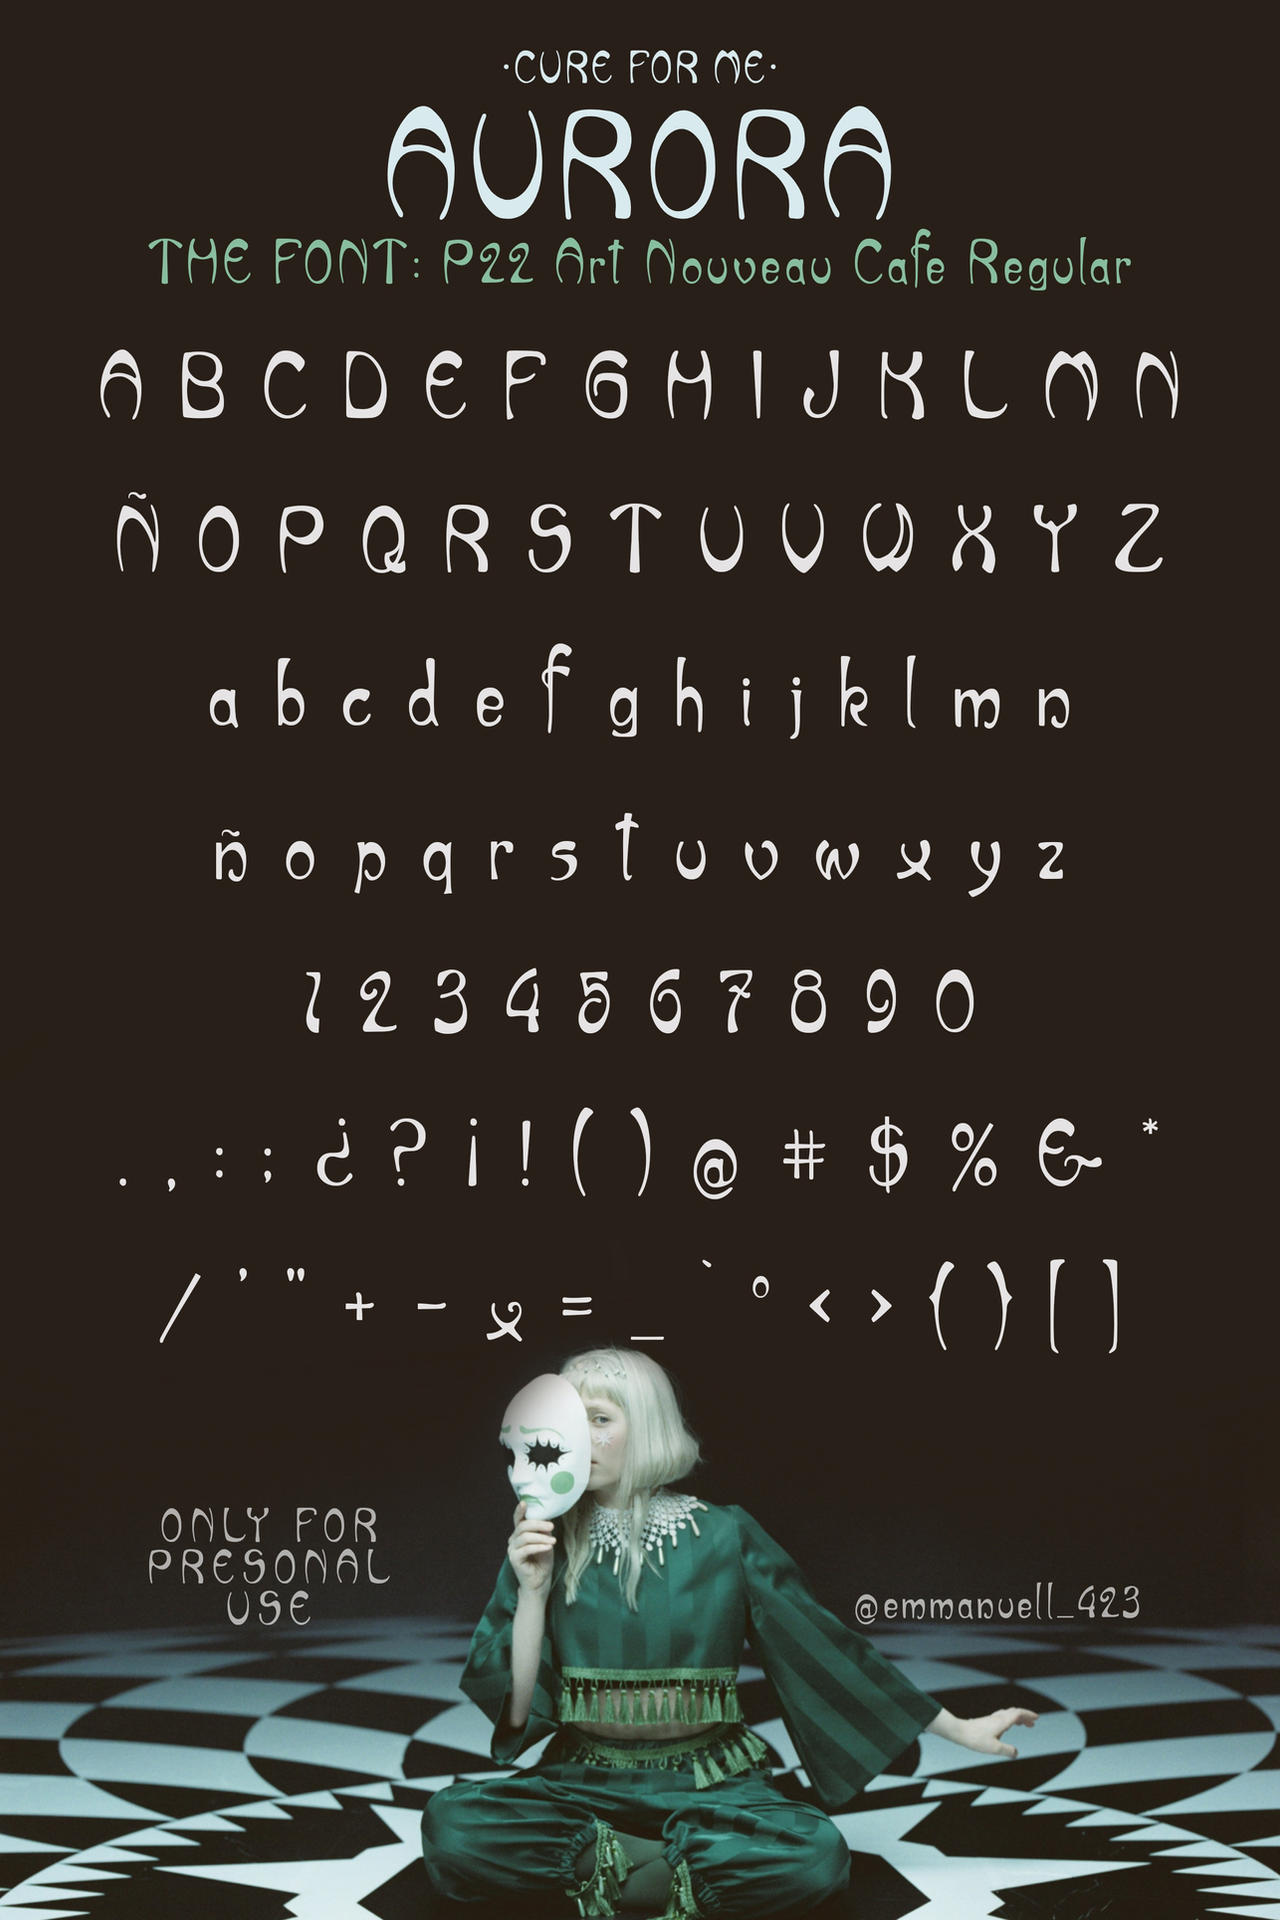 CURE FOR ME - AURORA (The font) @emmanuell 423 by manu423 on DeviantArt